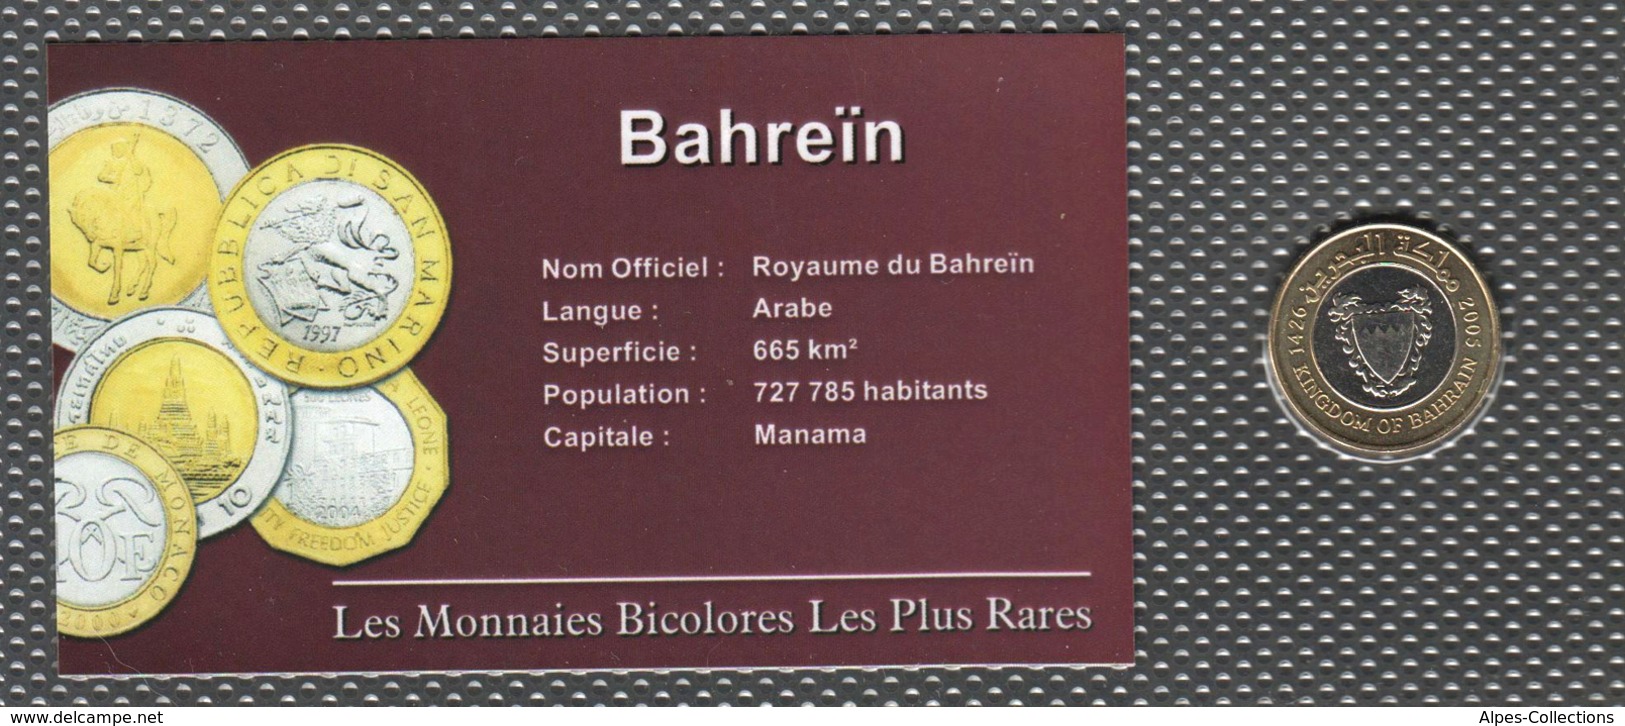 BHR26.1 - BAHREIN - MONNAIES BICOLORES LES PLUS RARES - 100 Fils - 2005 - Bahrein